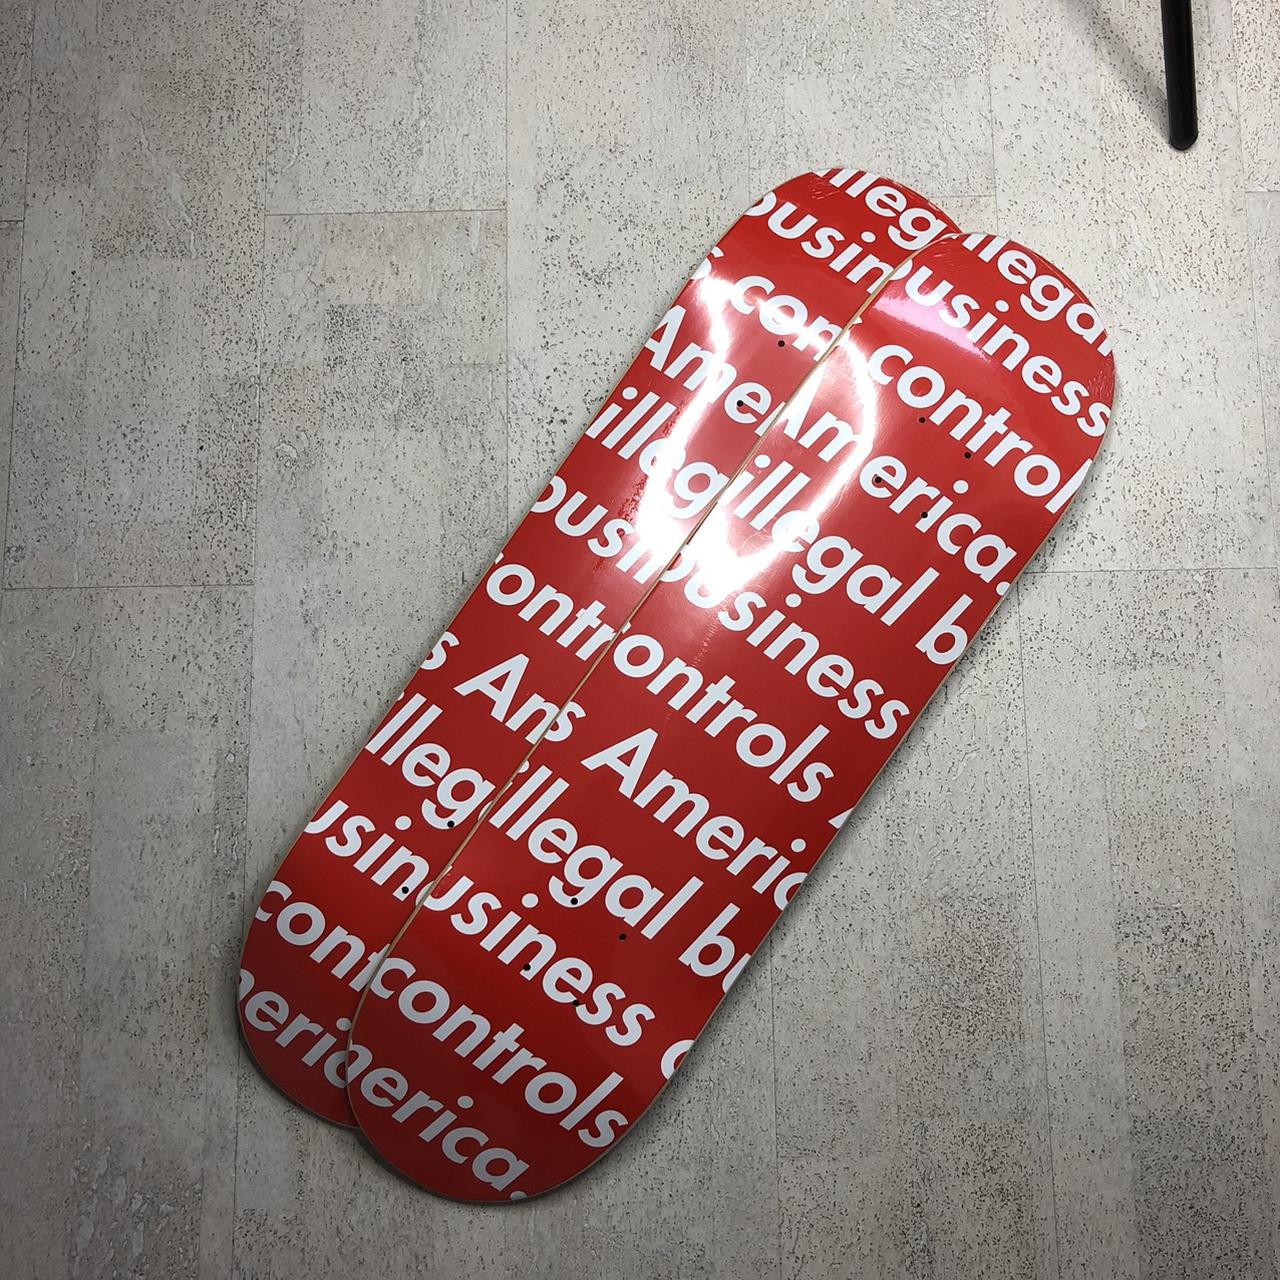 supreme skateboard deck poster from an old - Depop